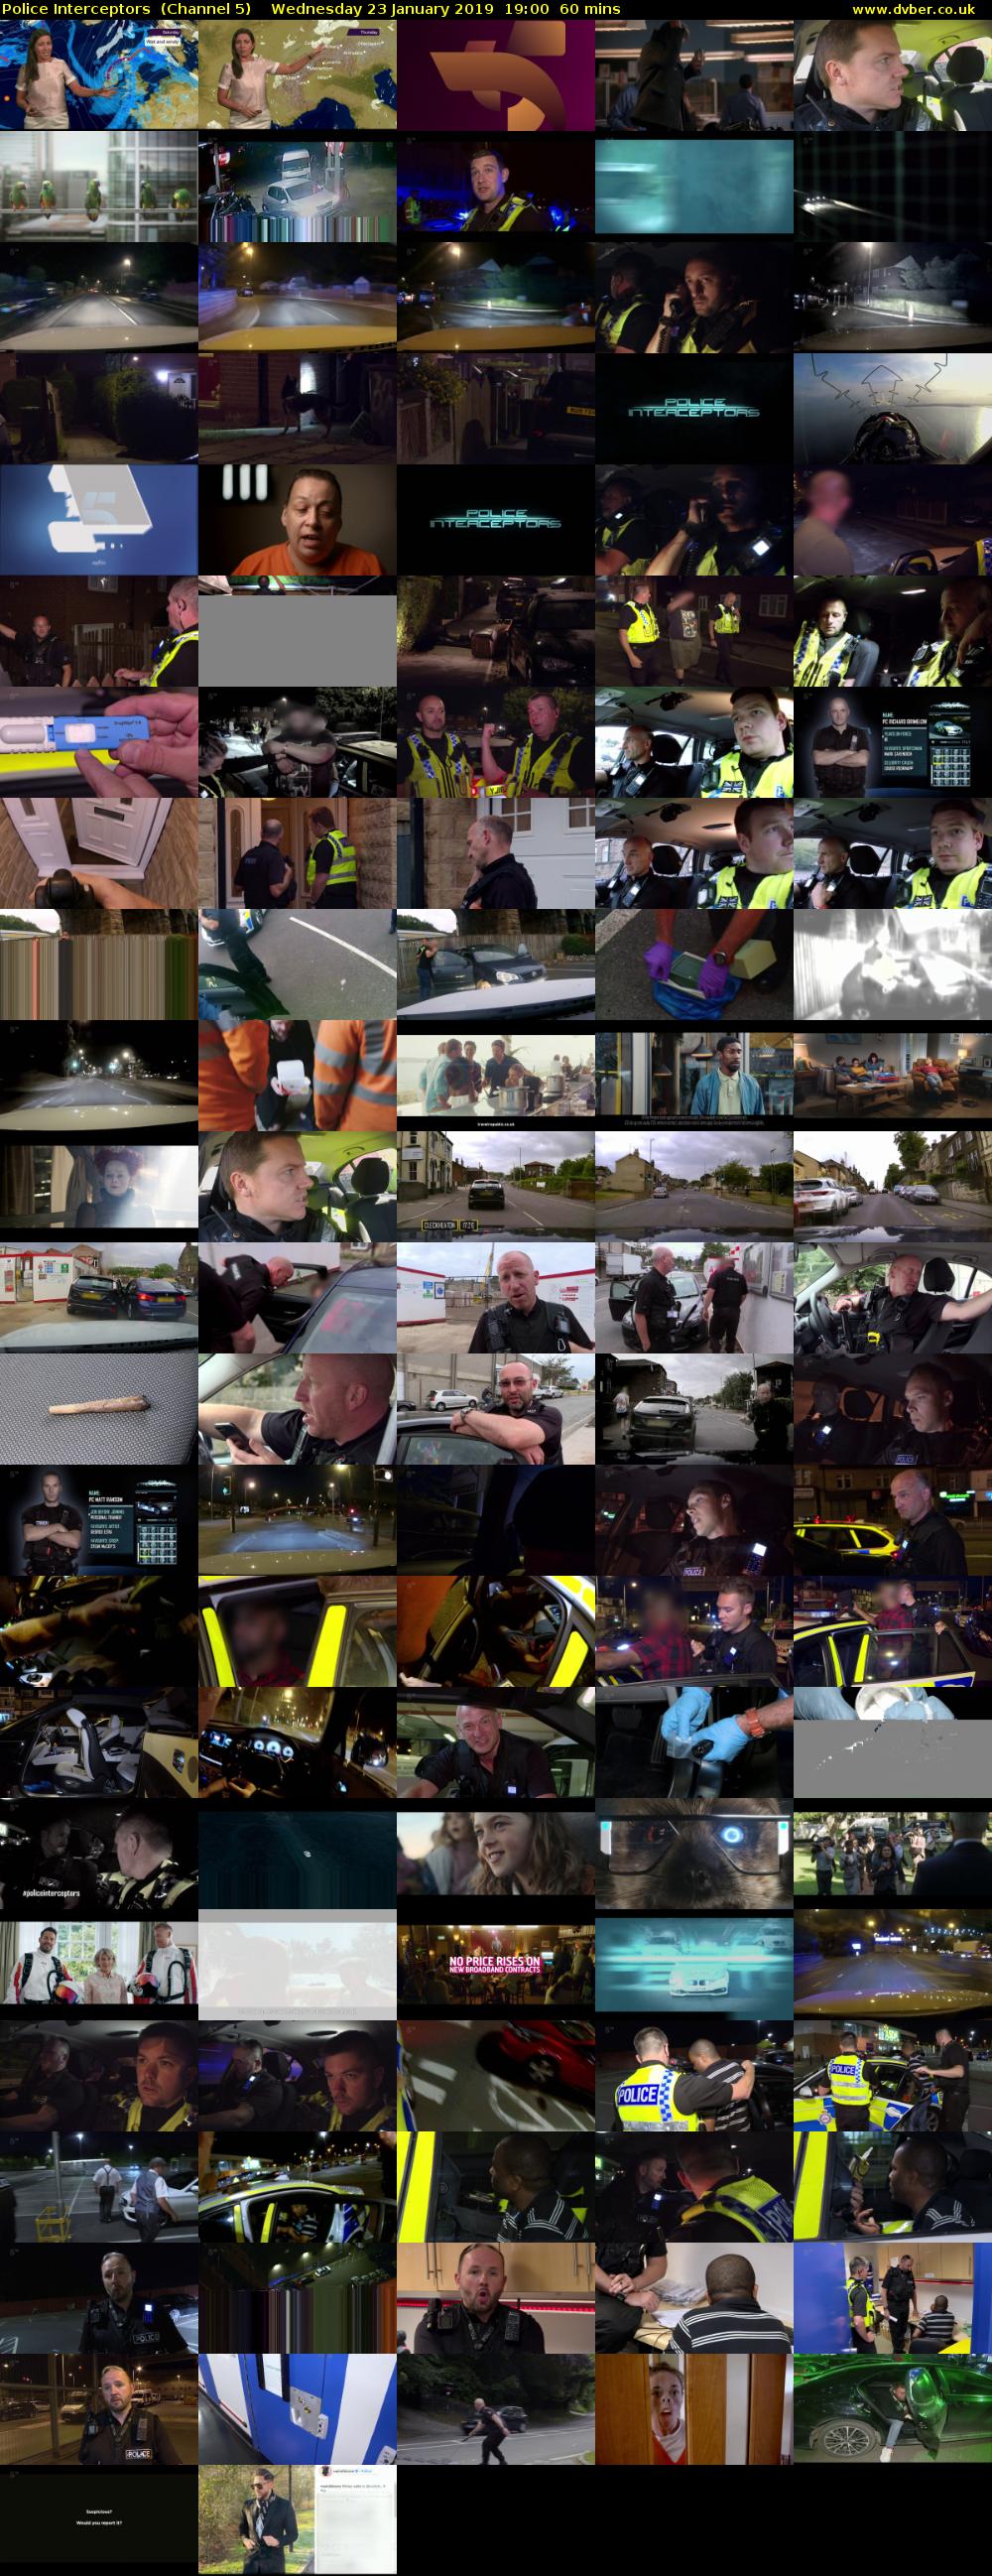 Police Interceptors  (Channel 5) Wednesday 23 January 2019 19:00 - 20:00